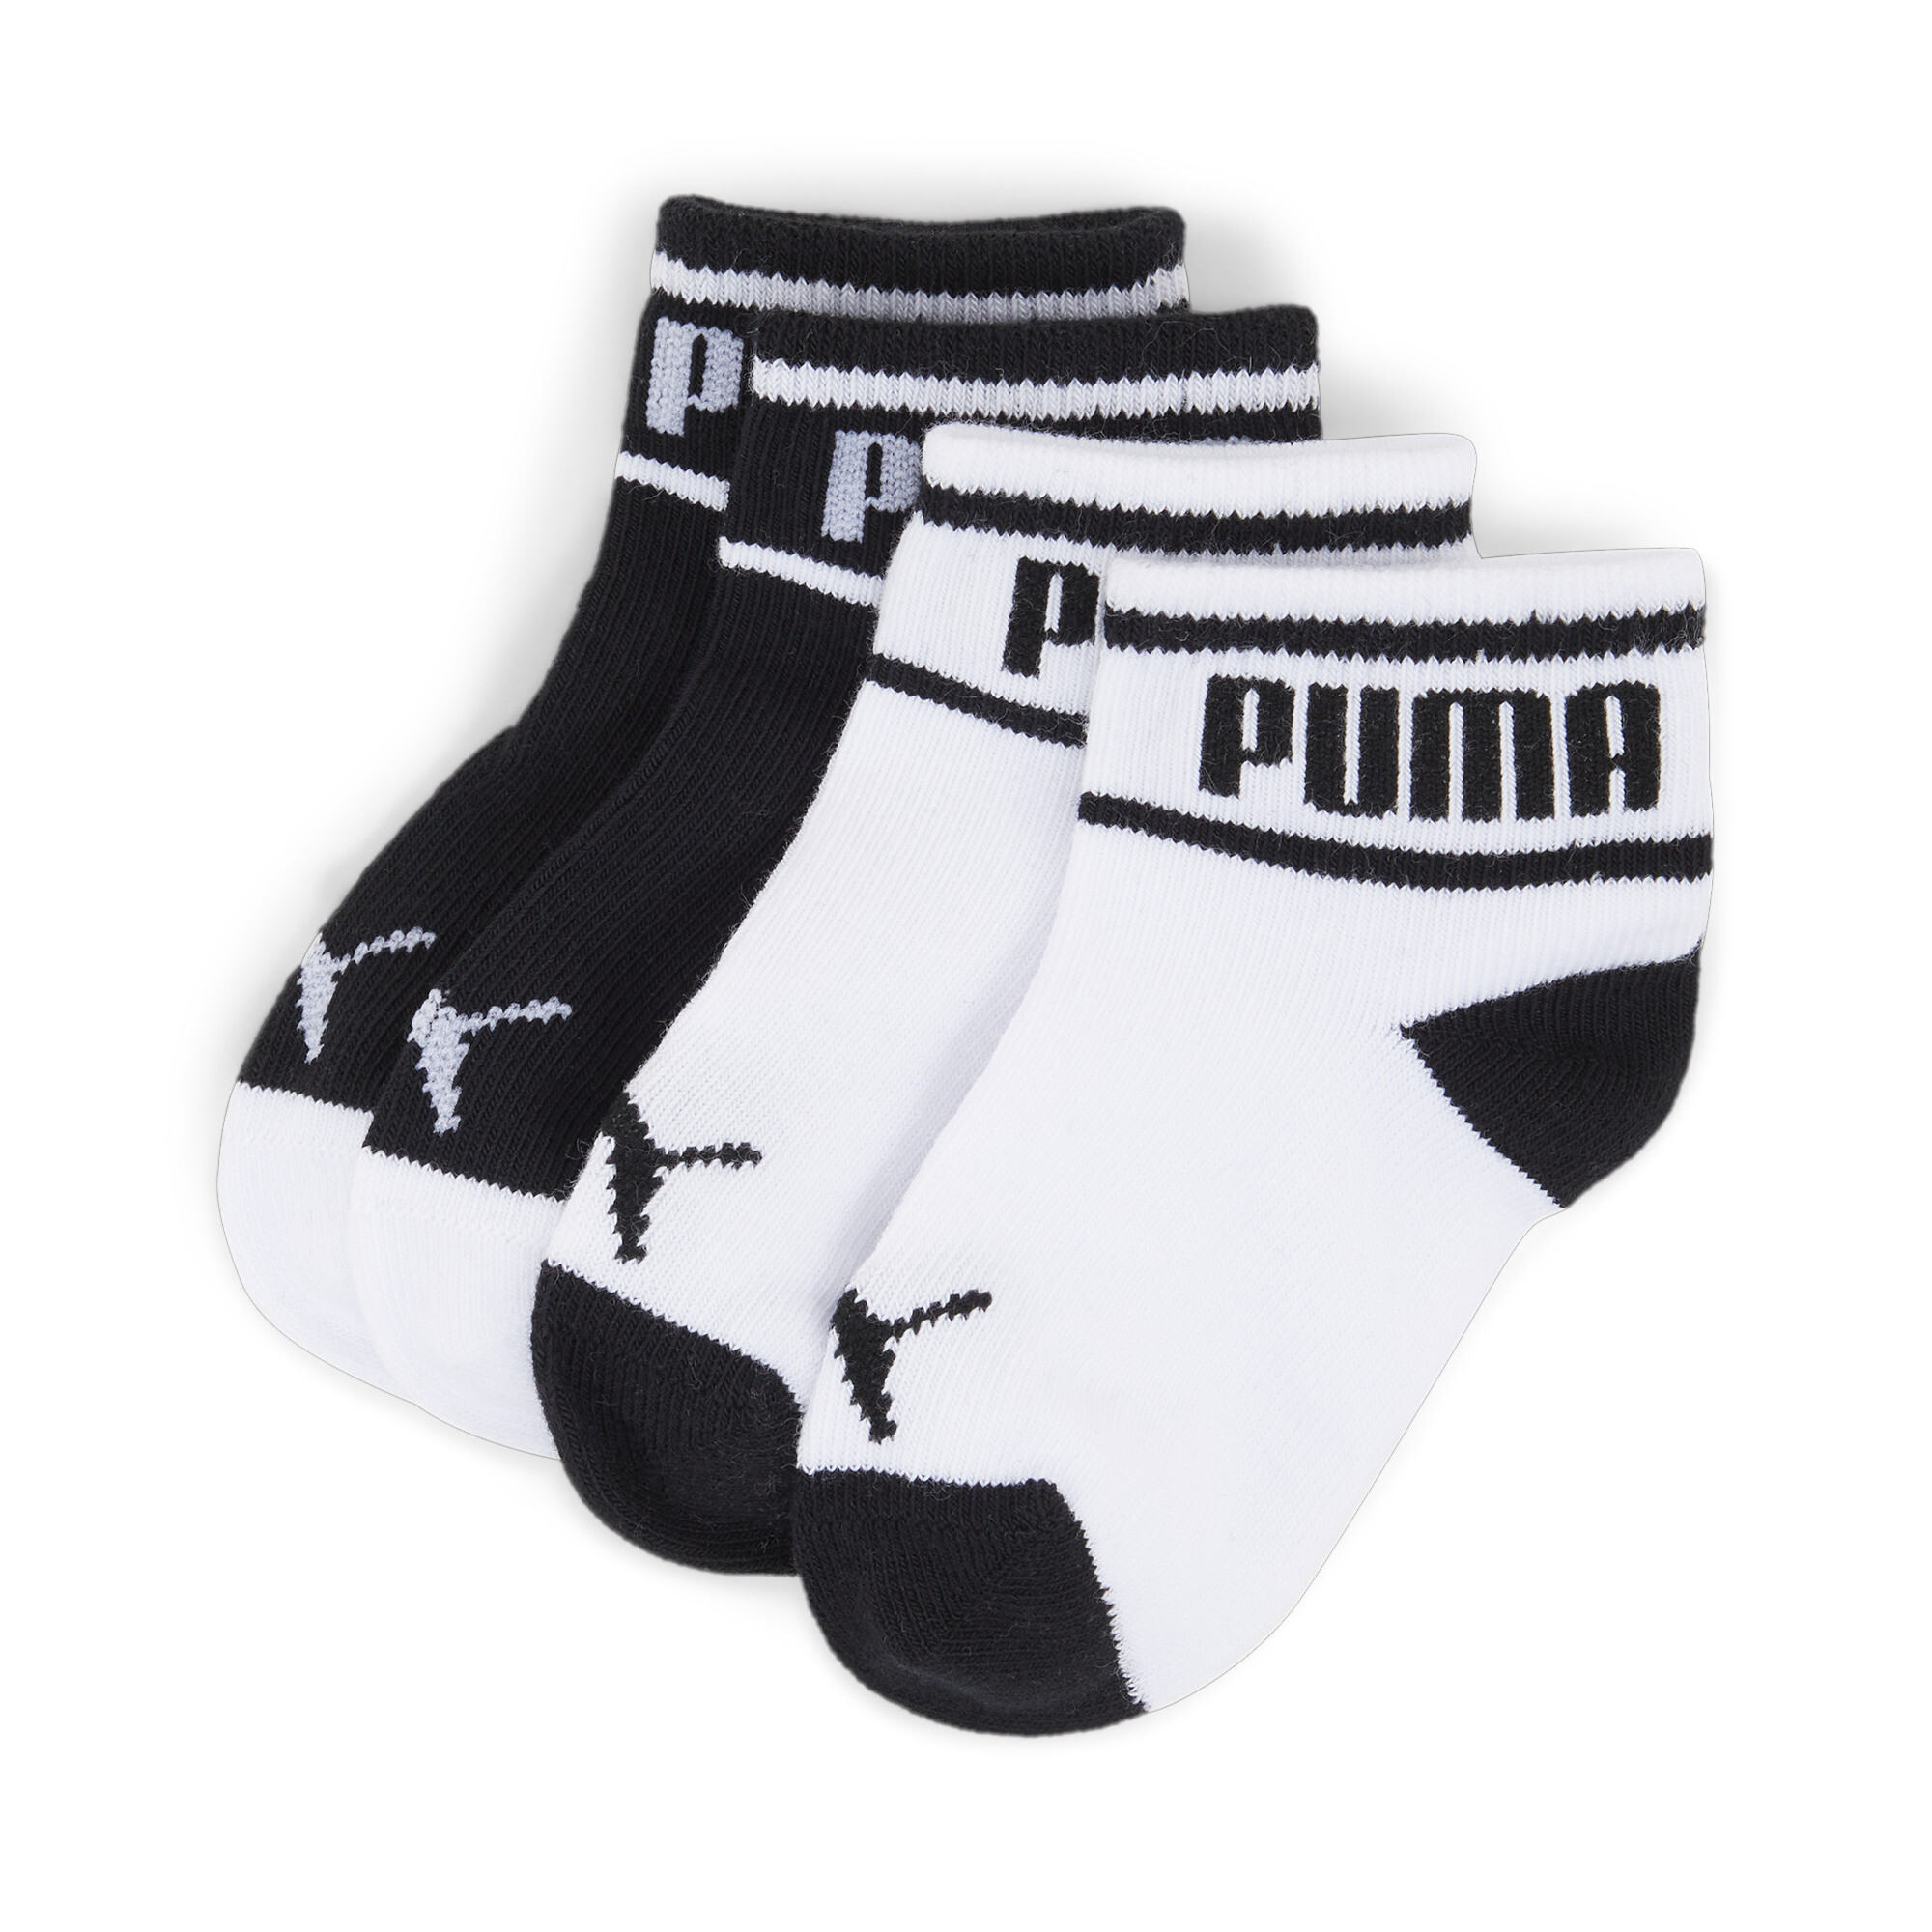 Puma Baby Word Lifestyle Socks 2 Pack, Size 23-26, Age